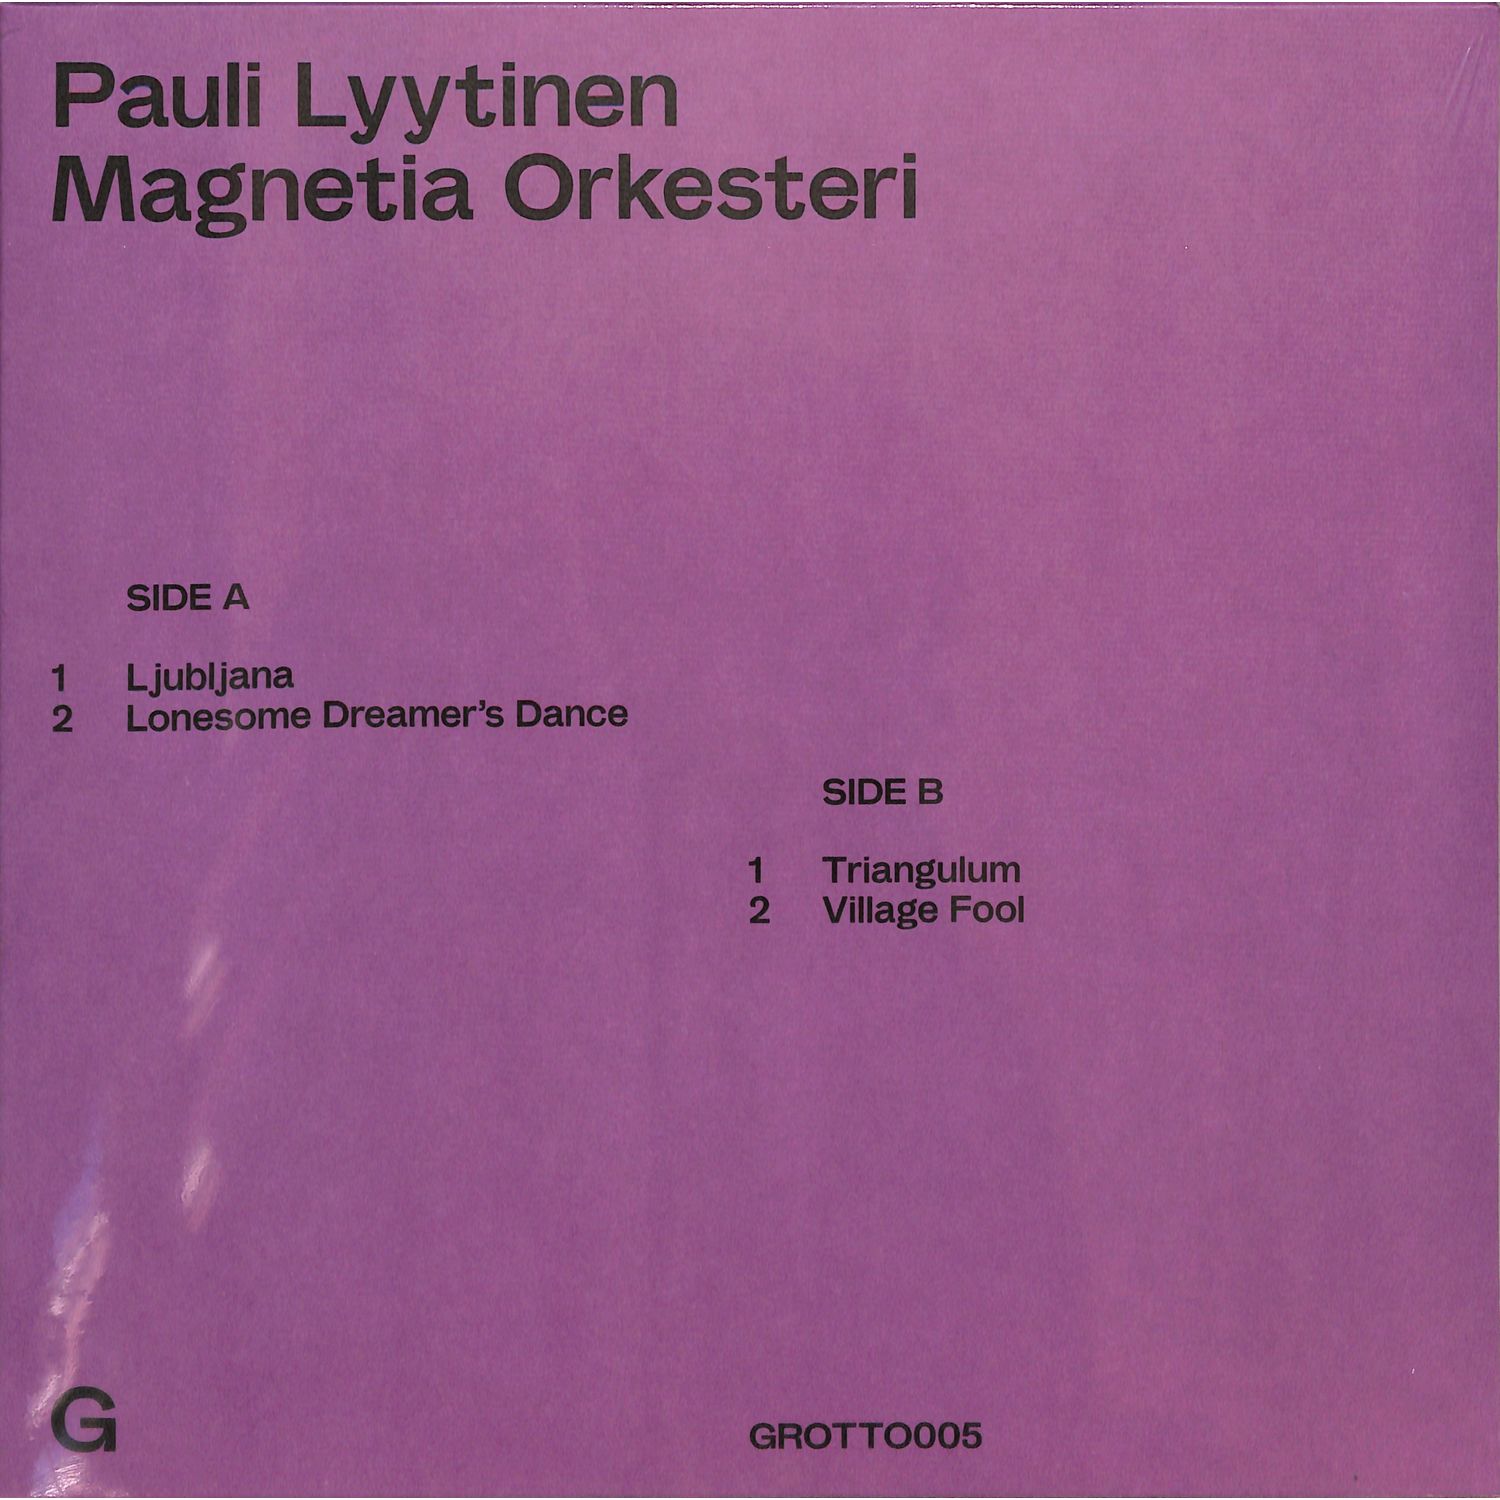 Pauli Lyytinen Magnetia Orkesteri - PAULI LYYTINEN MAGNETIA ORKESTERI 